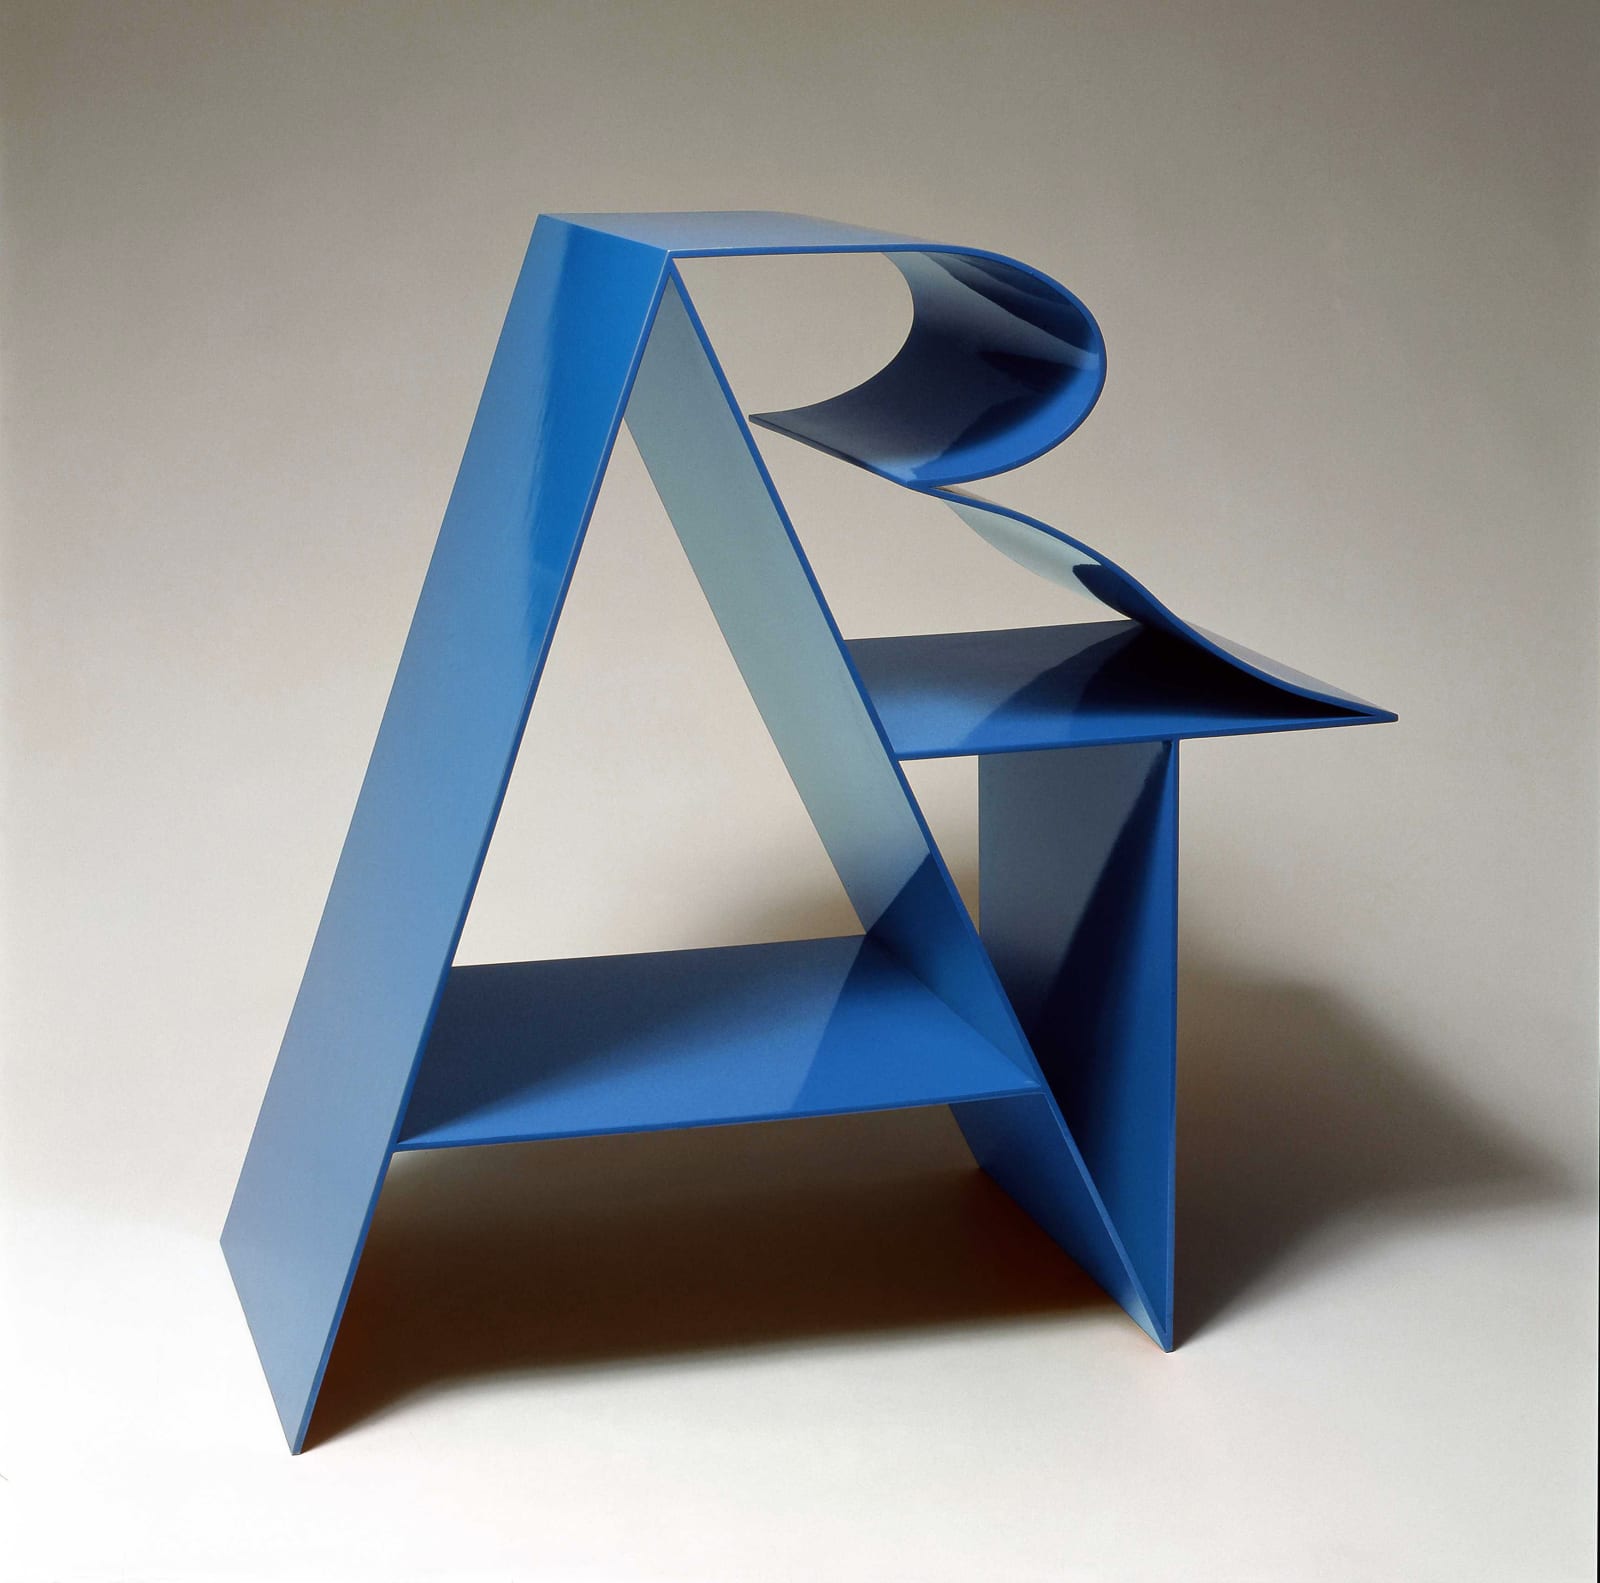 Robert Indiana ART Blue, 1972-2000 Polychrome aluminium 45.7 x 45.7 x 22.9 cm. (18 x 18 x 9 in.) Edition of 8 + 4 AP IND00028 Artwork © Morgan Art Foundation Ltd./Artists Rights Society (ARS), NY